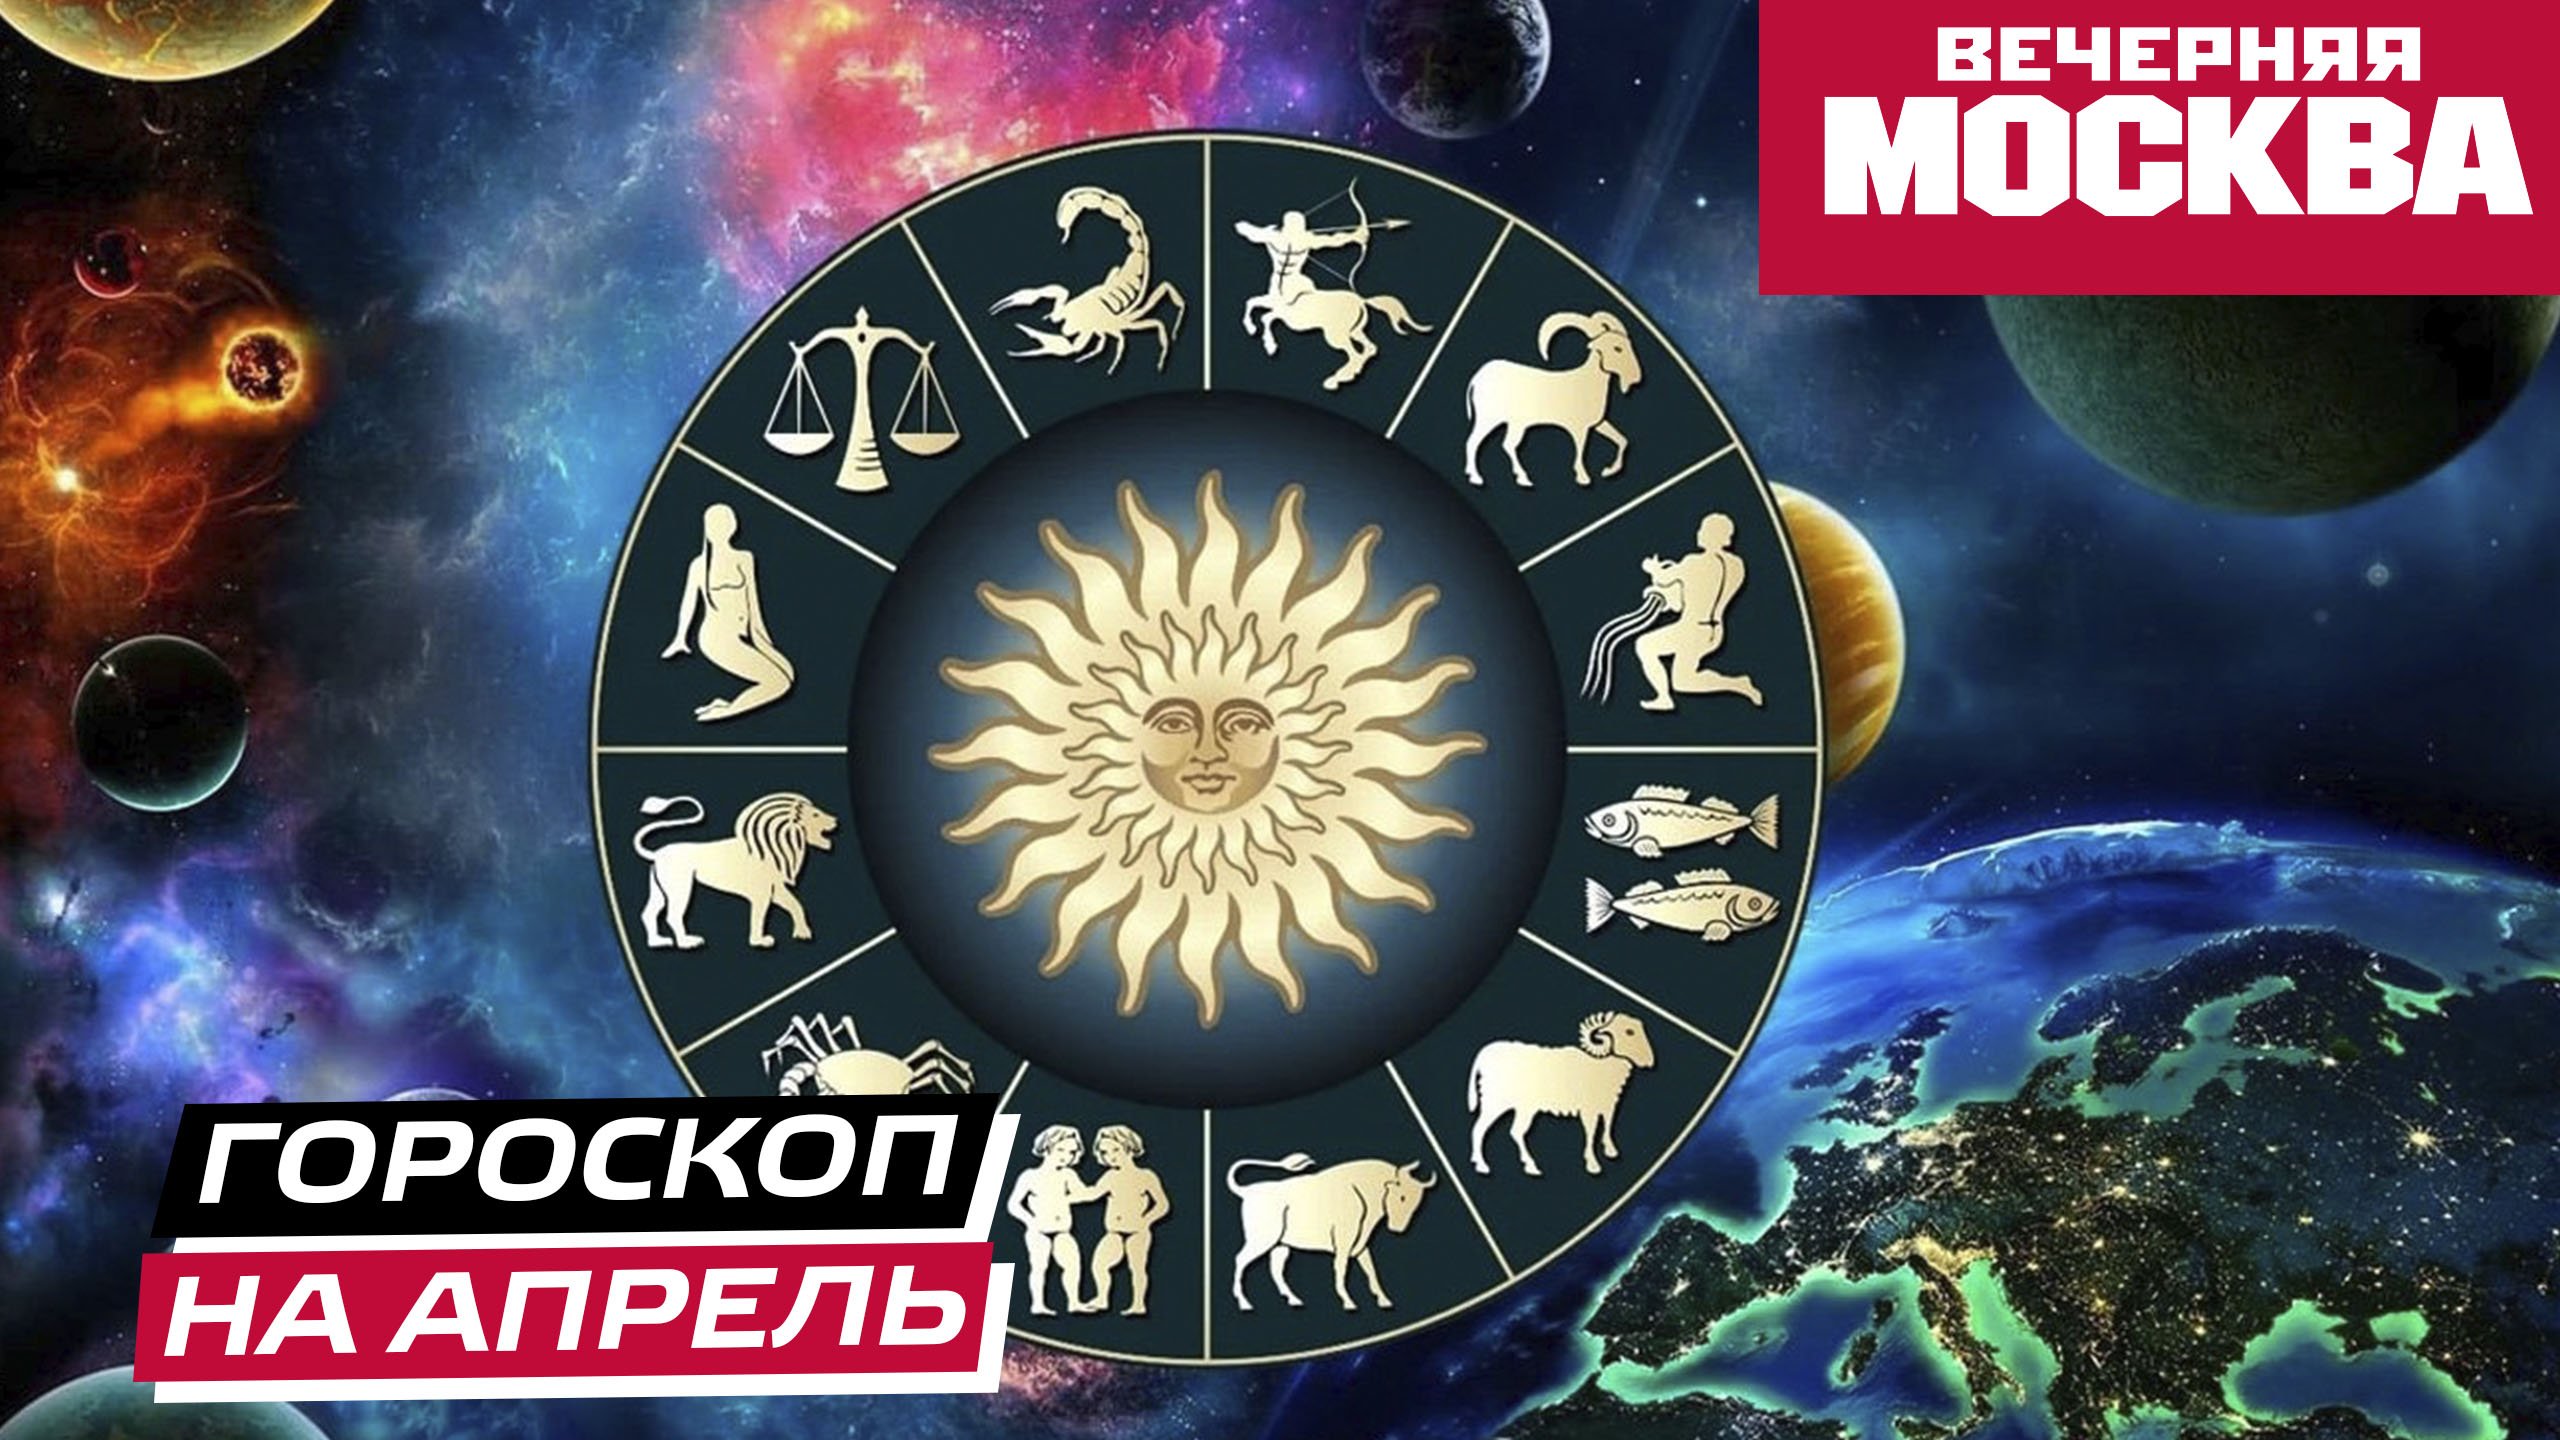 Прогноз для знаков Зодиака на апрель от Александра Зараева